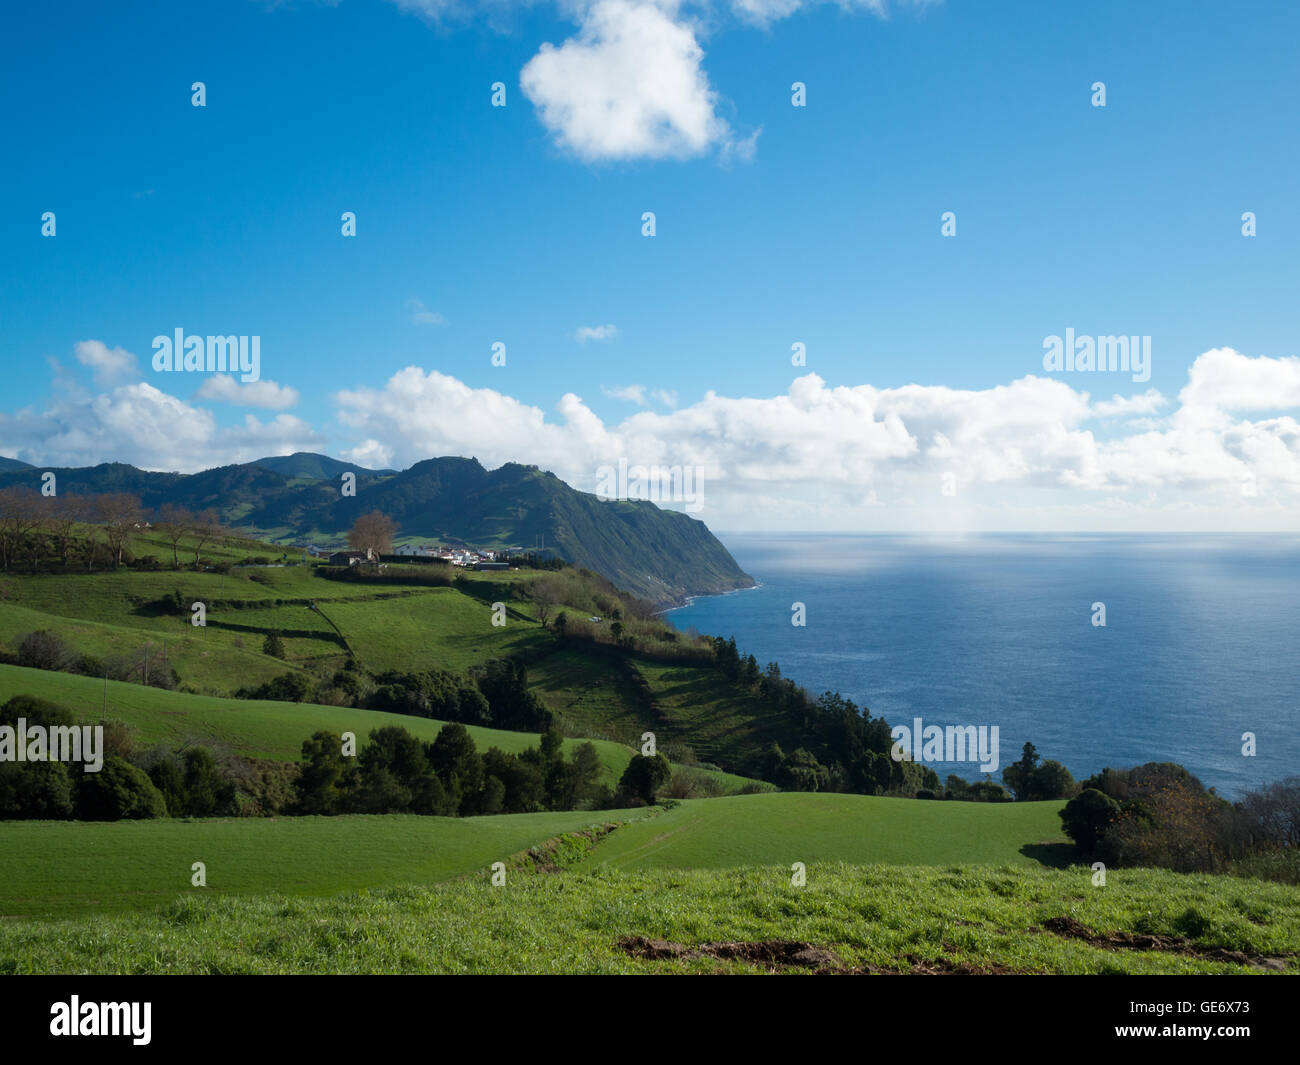 São Miguel island landscape Stock Photo